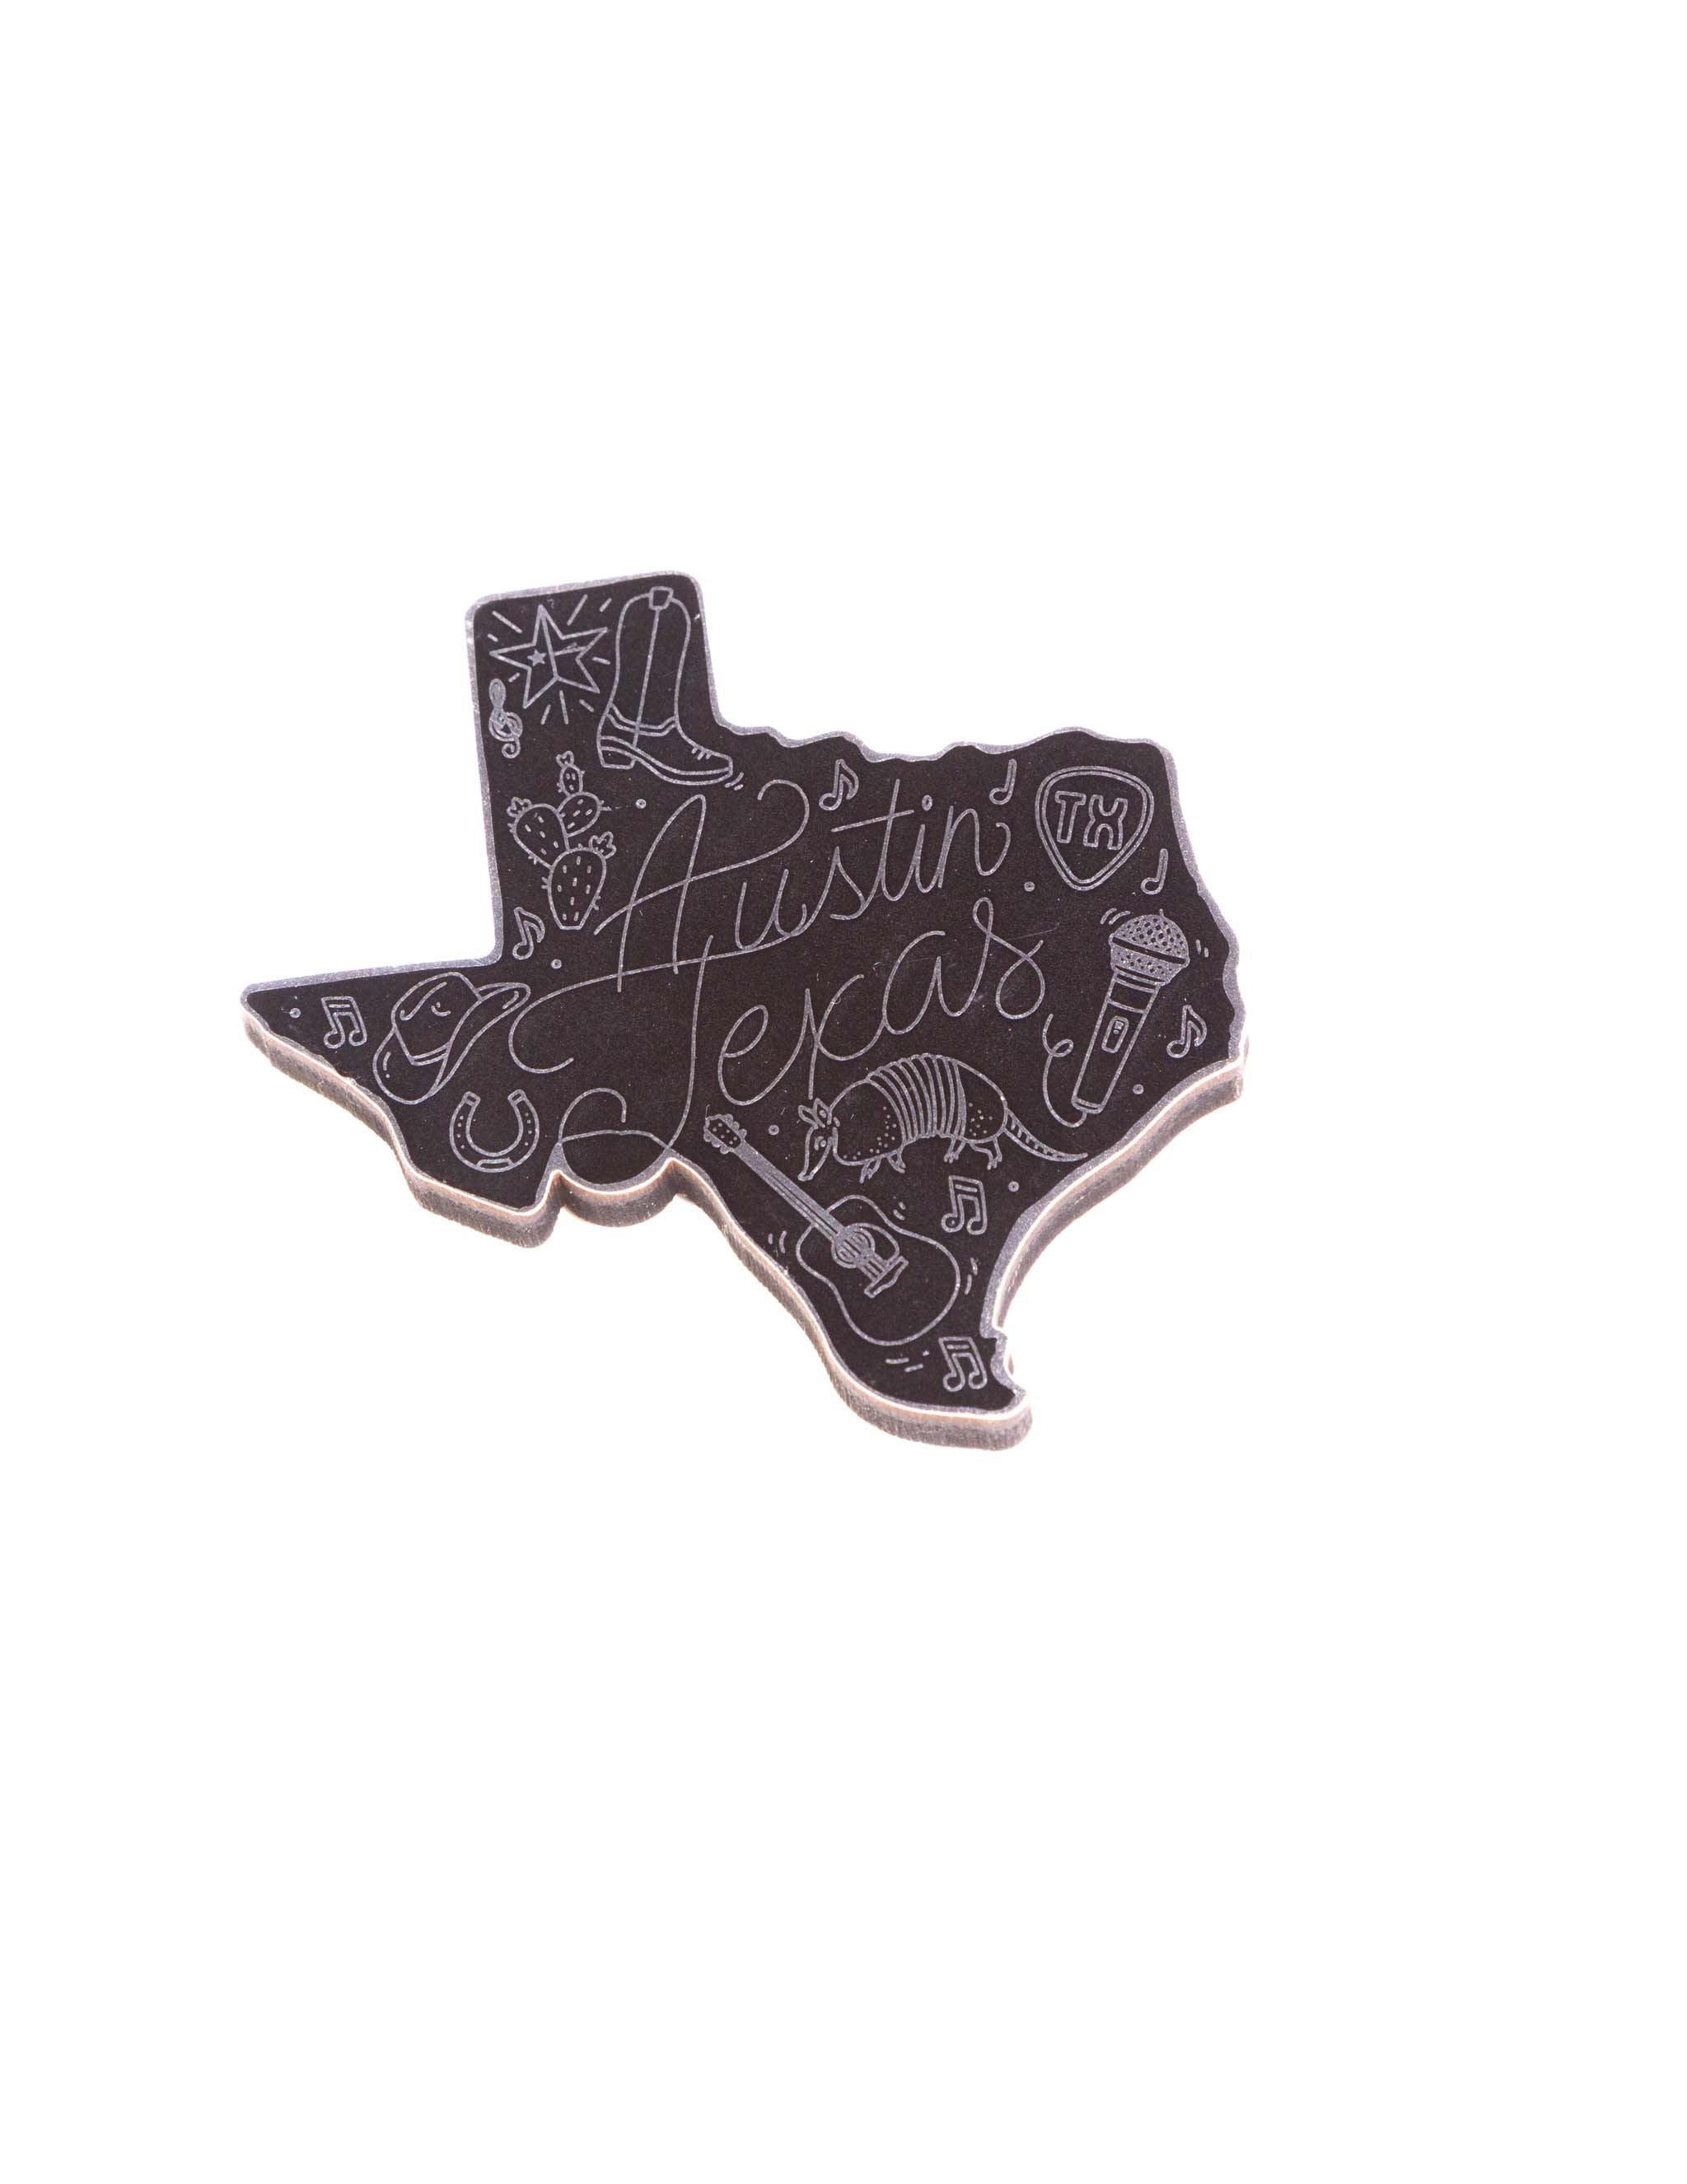 Austin Texas State Outline Foil Magnet